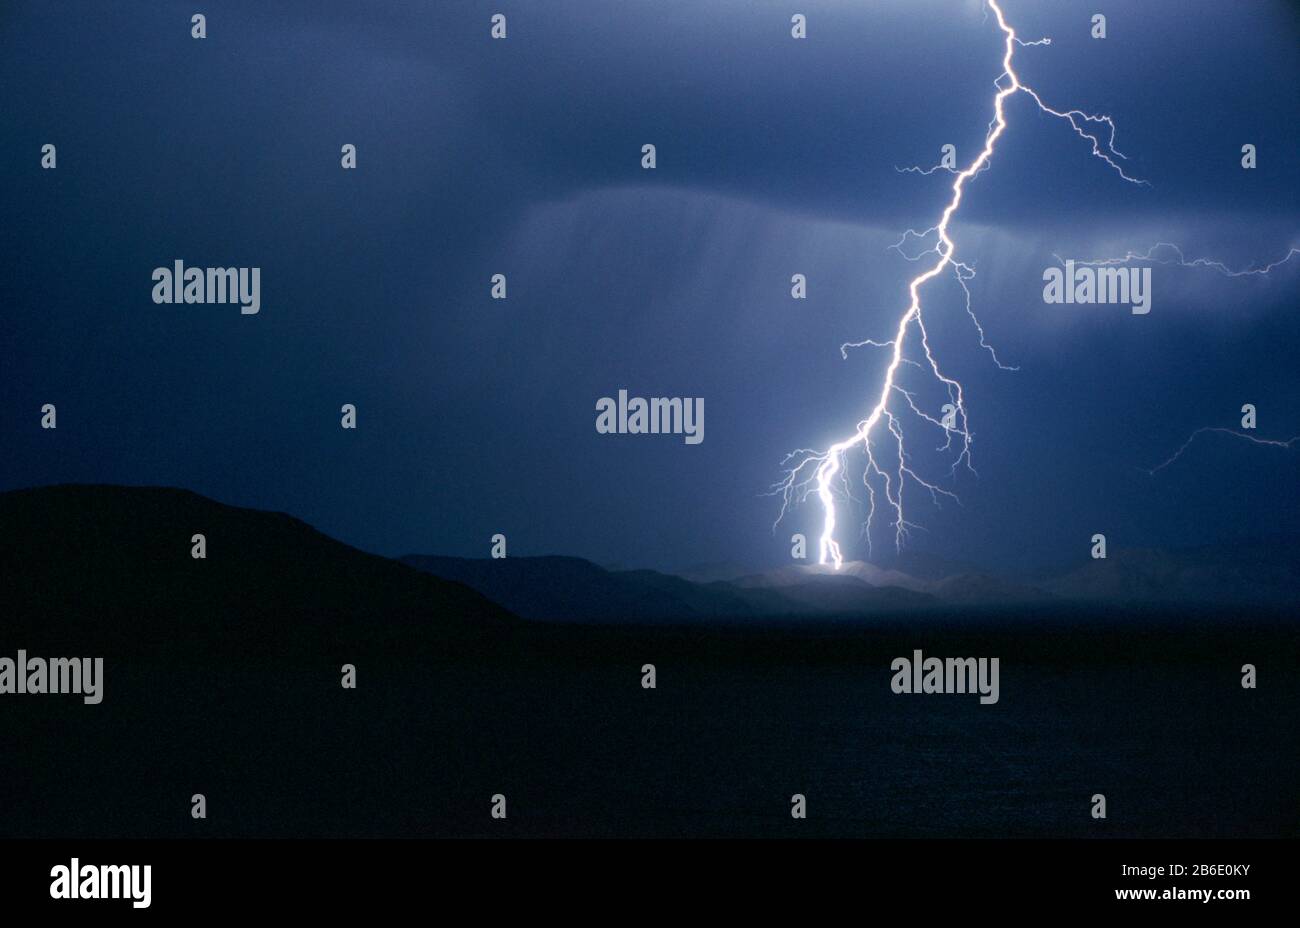 White lightning cracking across a moody dark sky at night. Stock Photo